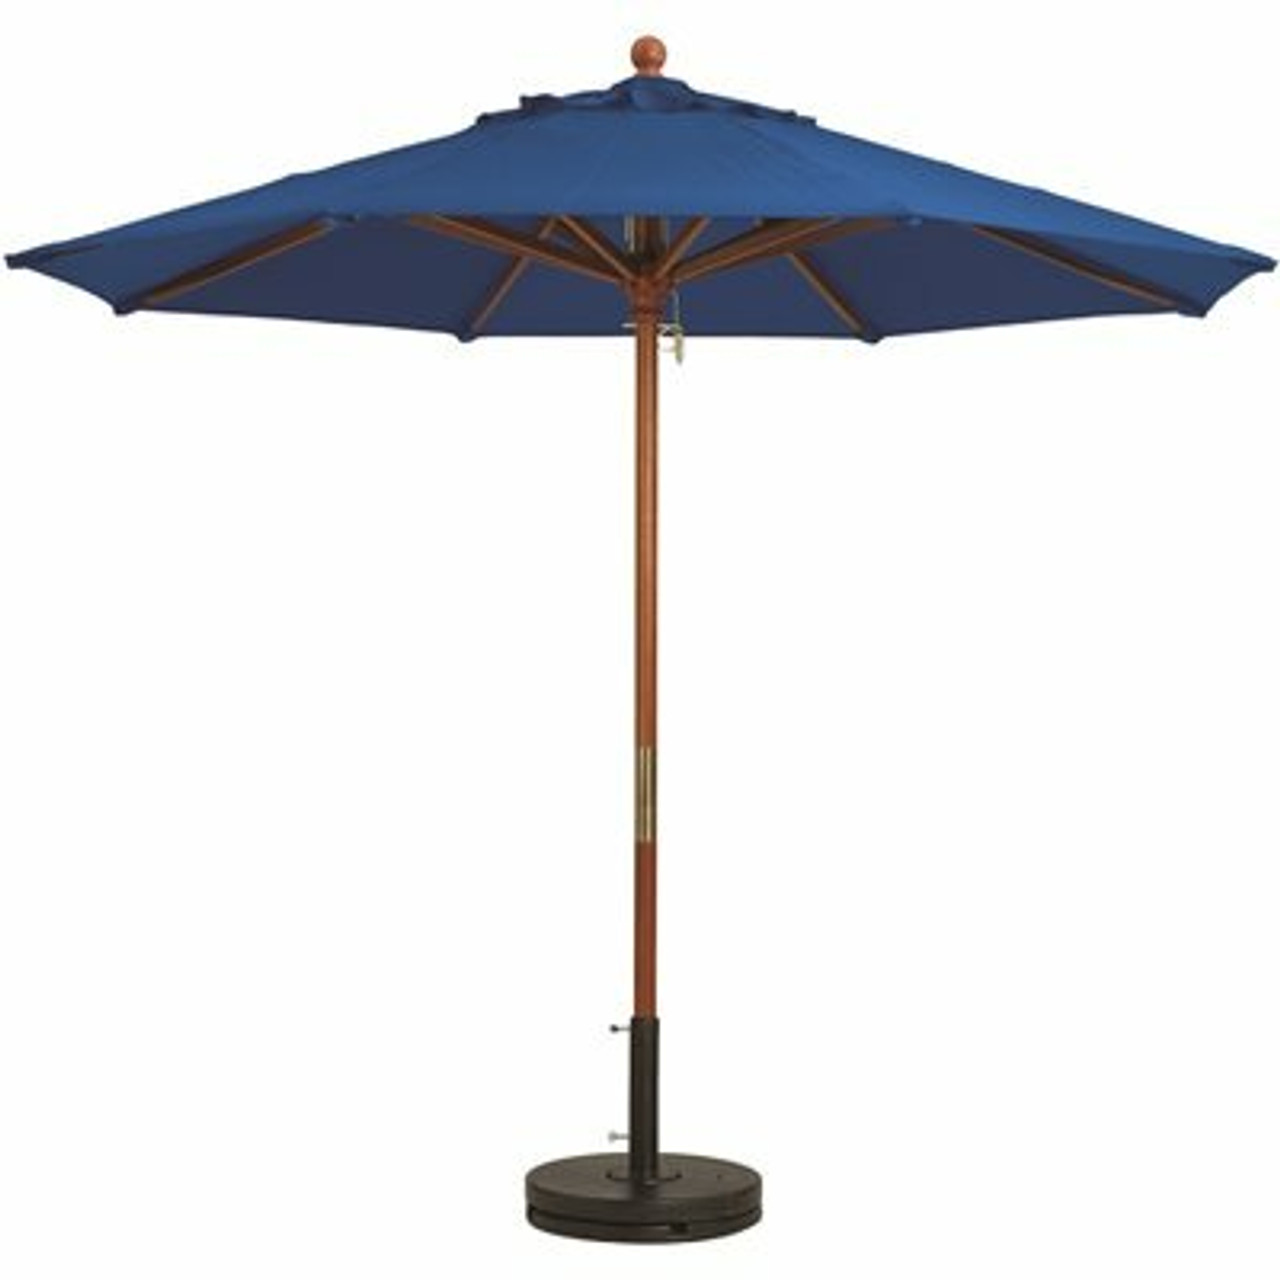 Grosfillex 7 Ft. Market Wooden Patio Umbrella In Pacific Blue